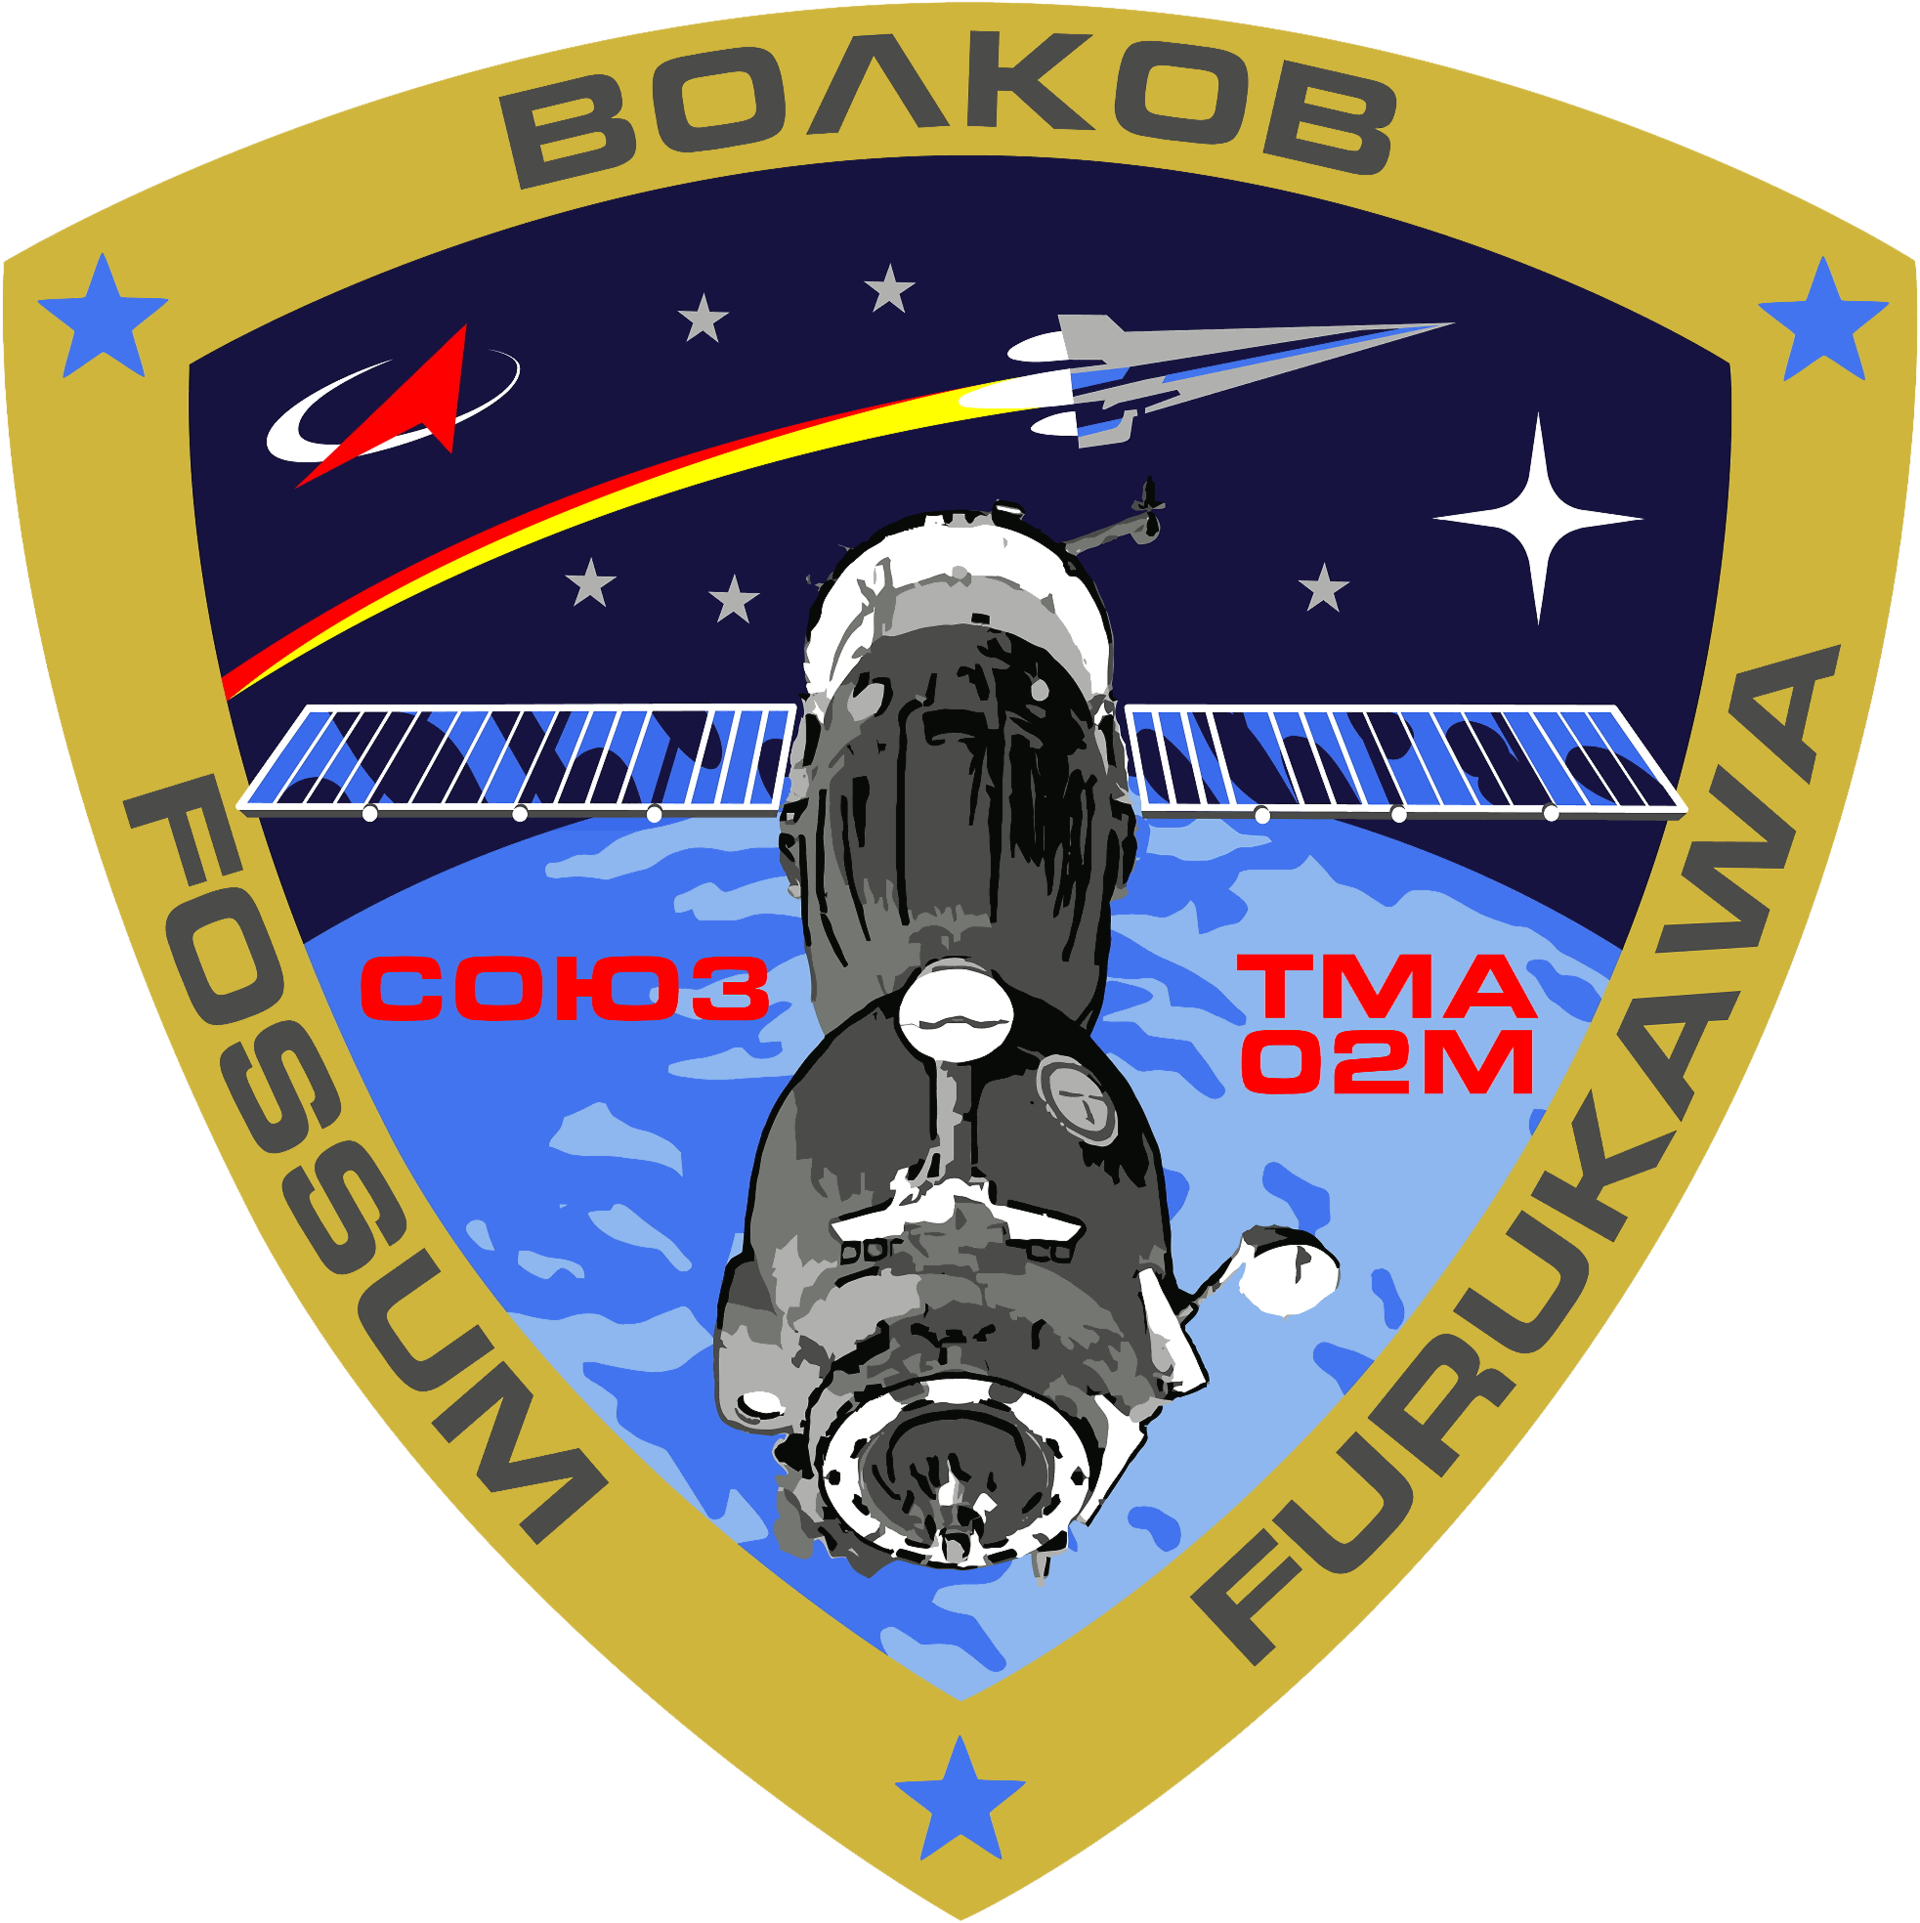 Mission patch for Soyuz TMA-02M